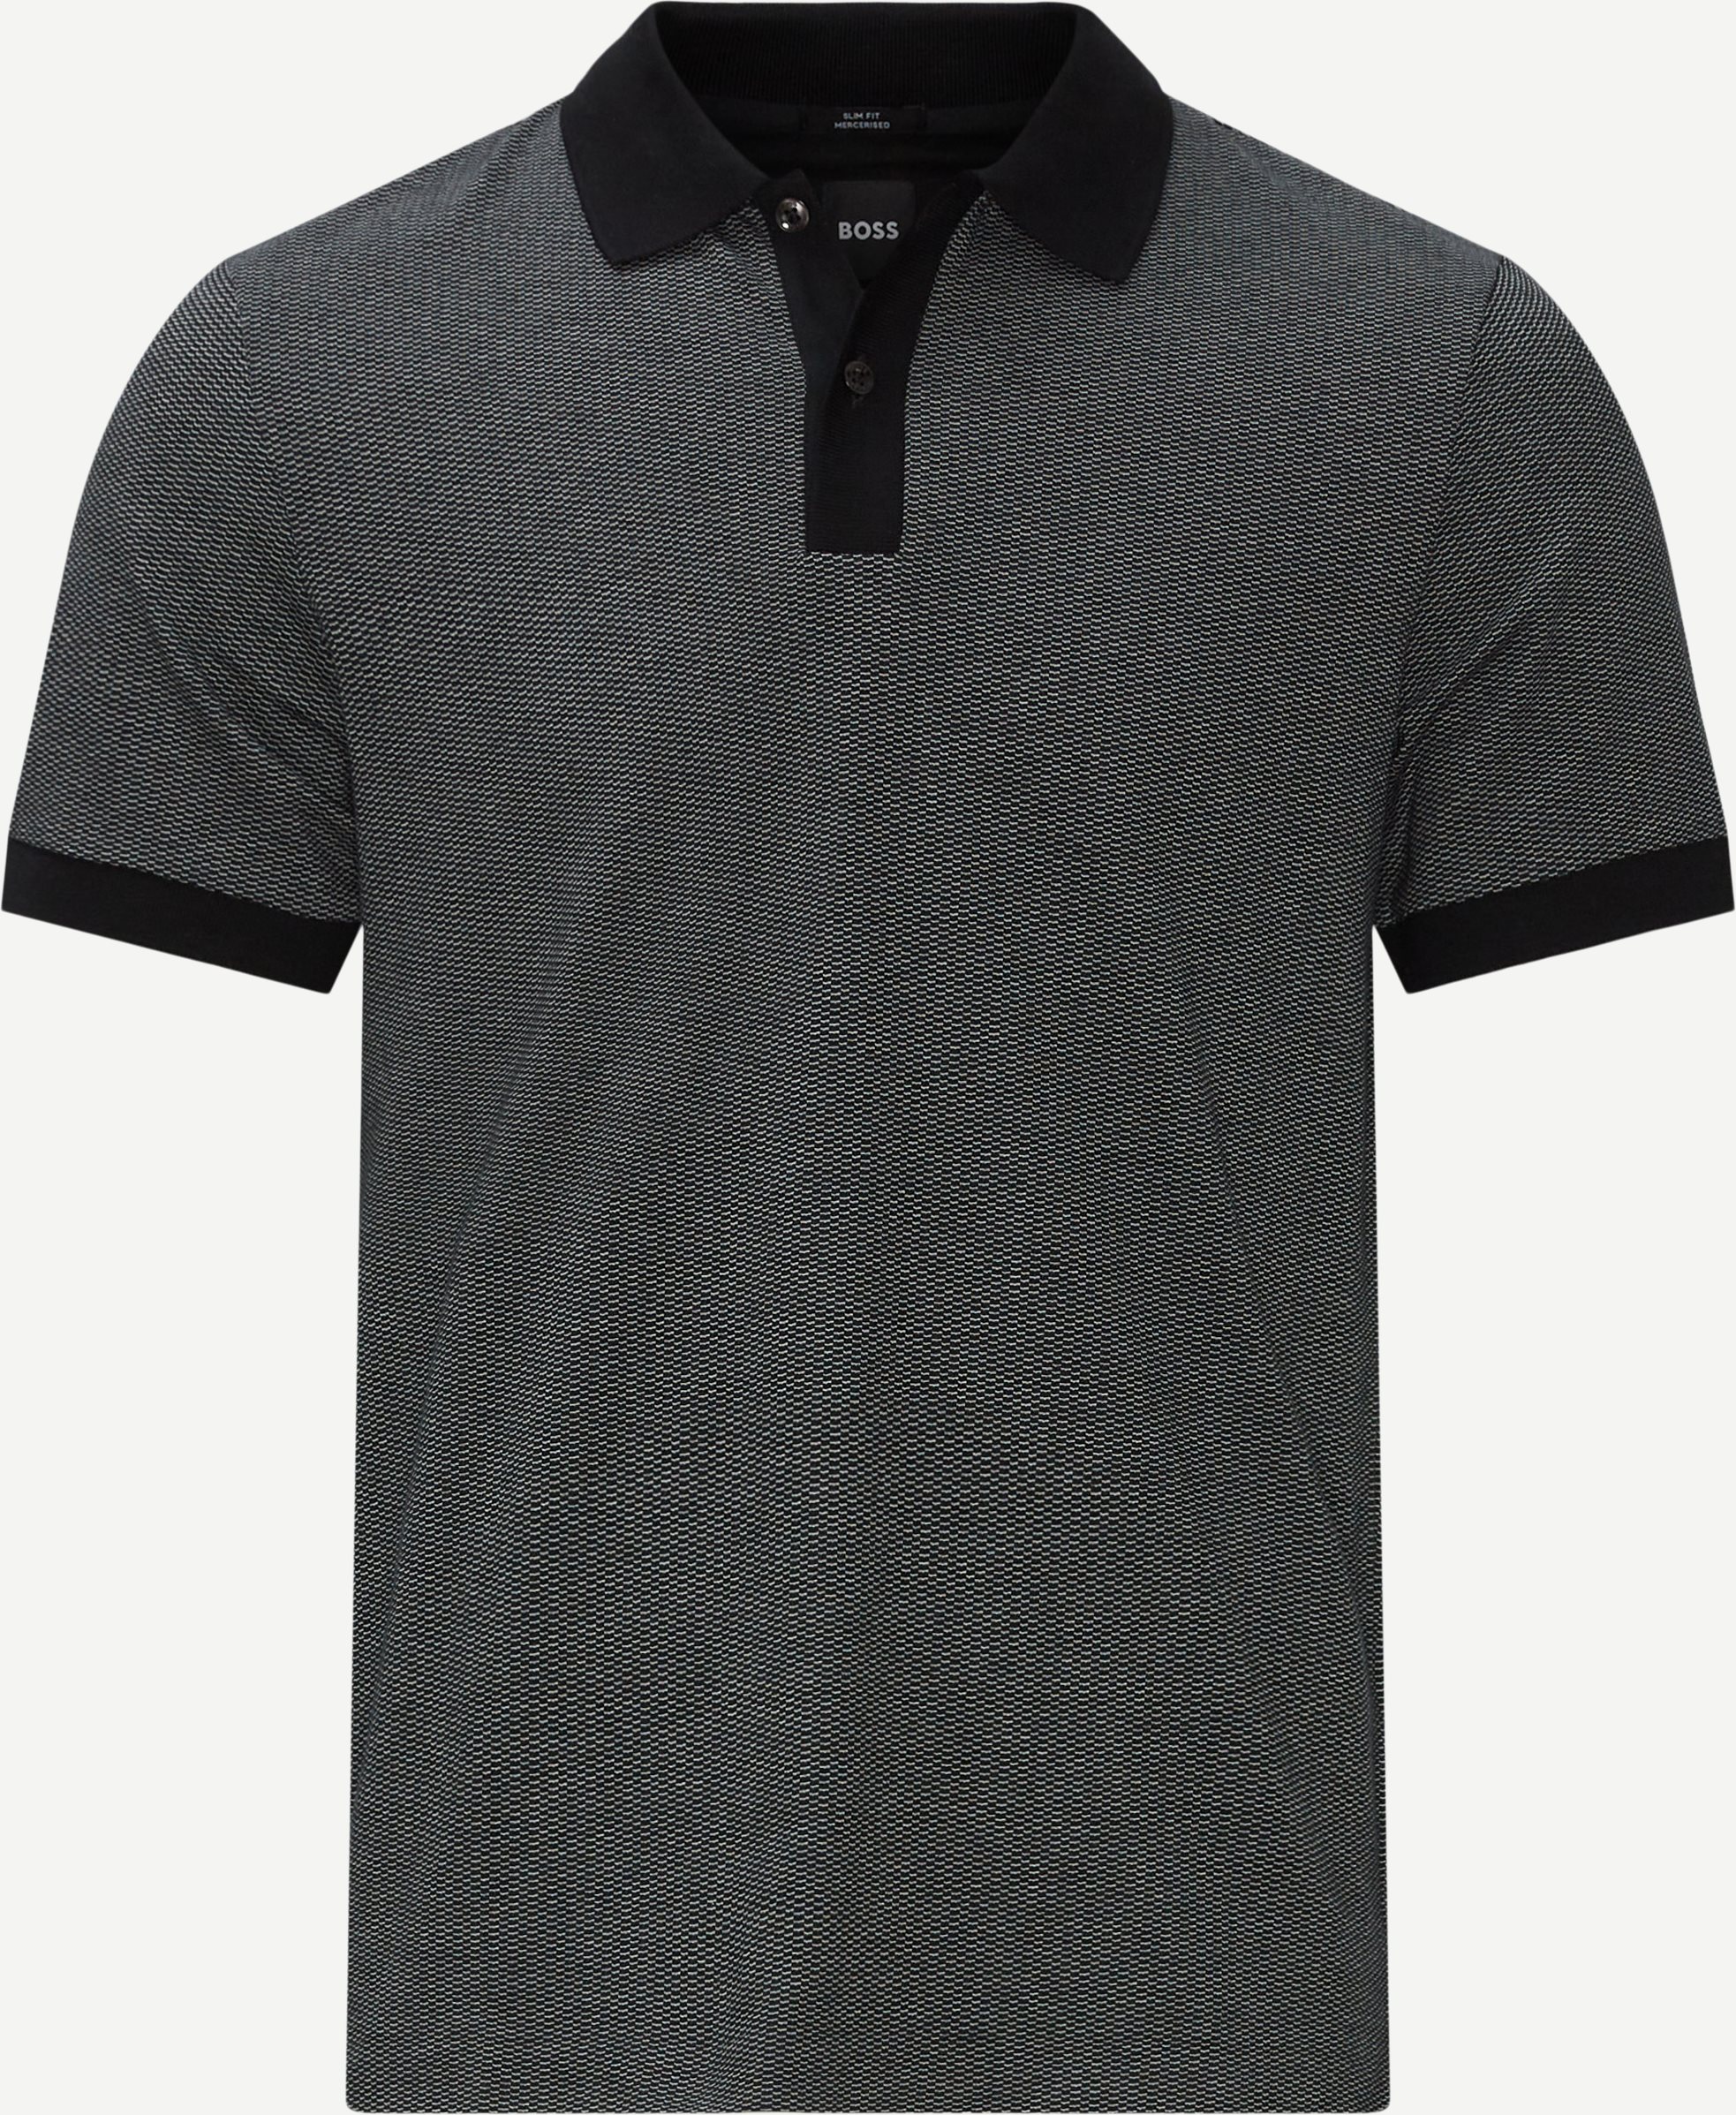 Phillipssons Merceriseret Polo - T-shirts - Slim fit - Sort